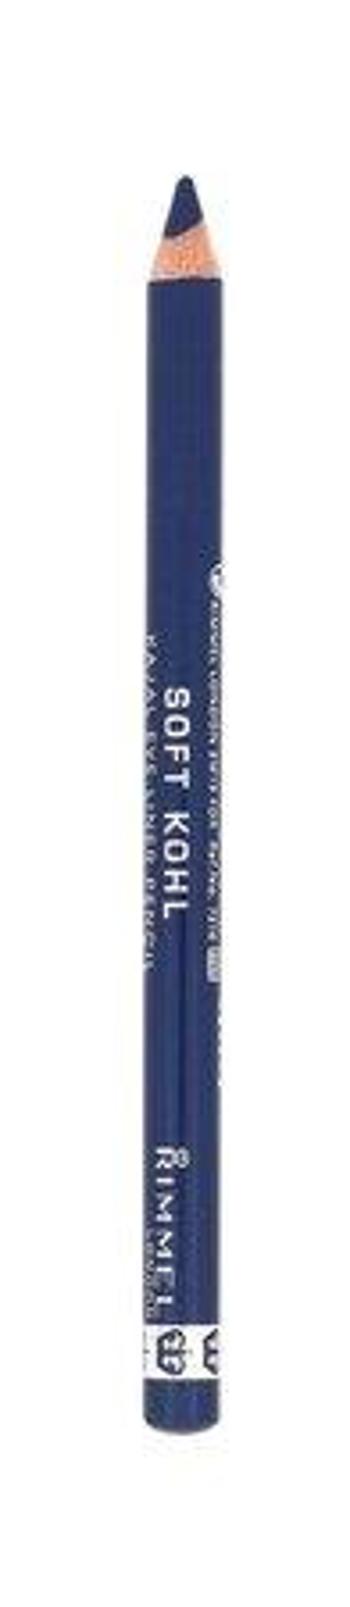 Tužka na oči Rimmel London - Soft Kohl , 1,2ml, 021, Denim, Blue